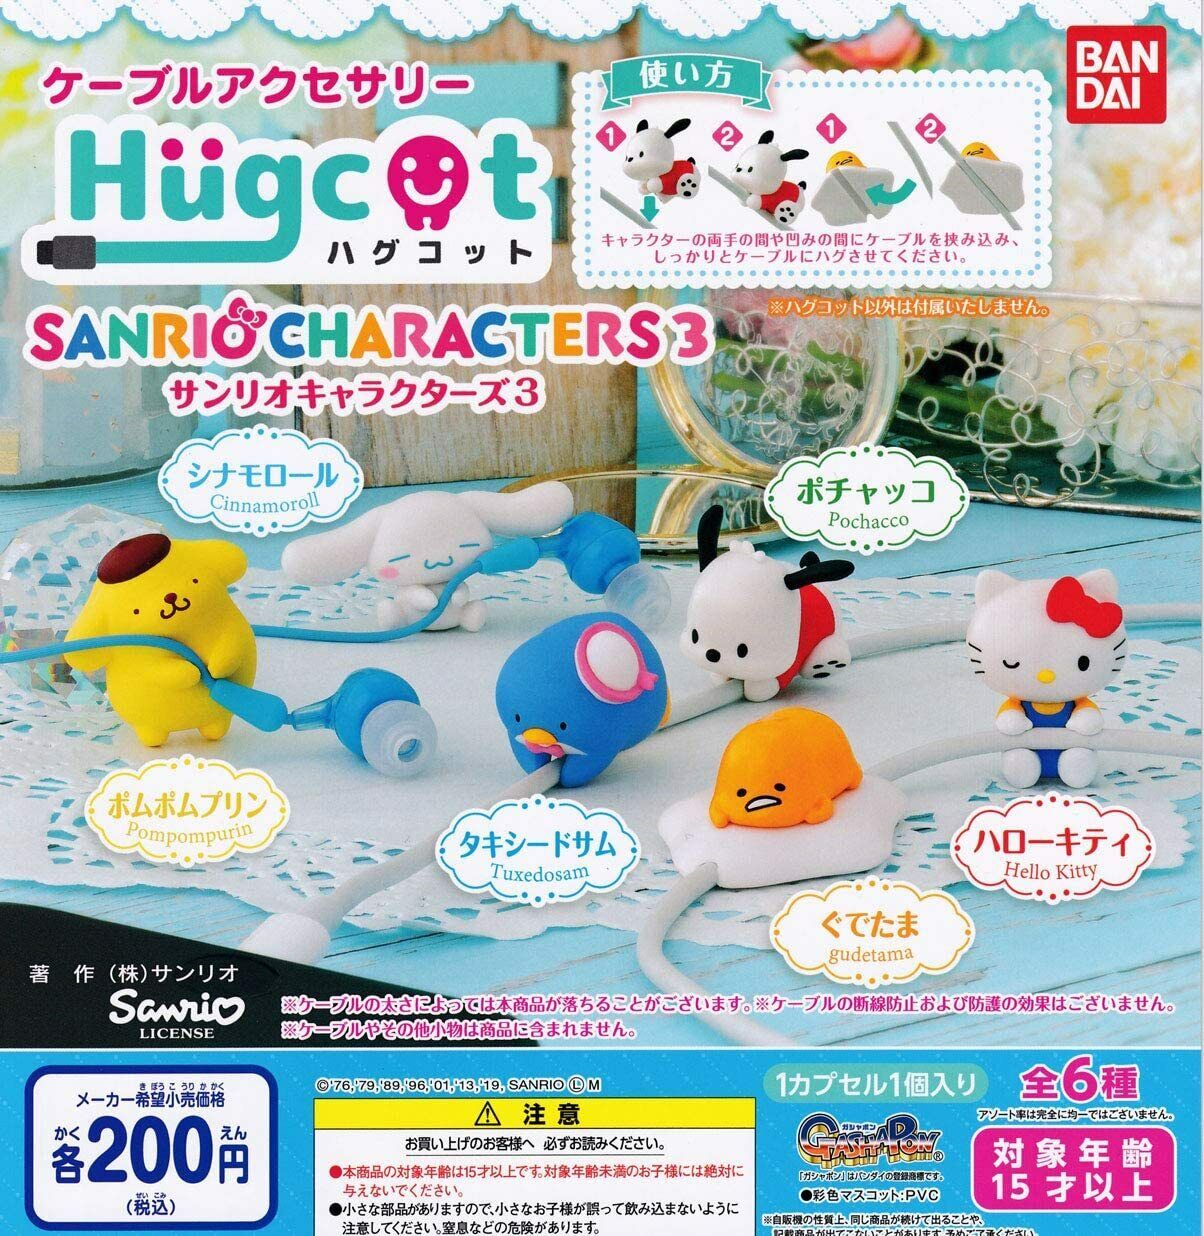 Sanrio Characters Hugcot Series 3 Gashapon, Cable Bites